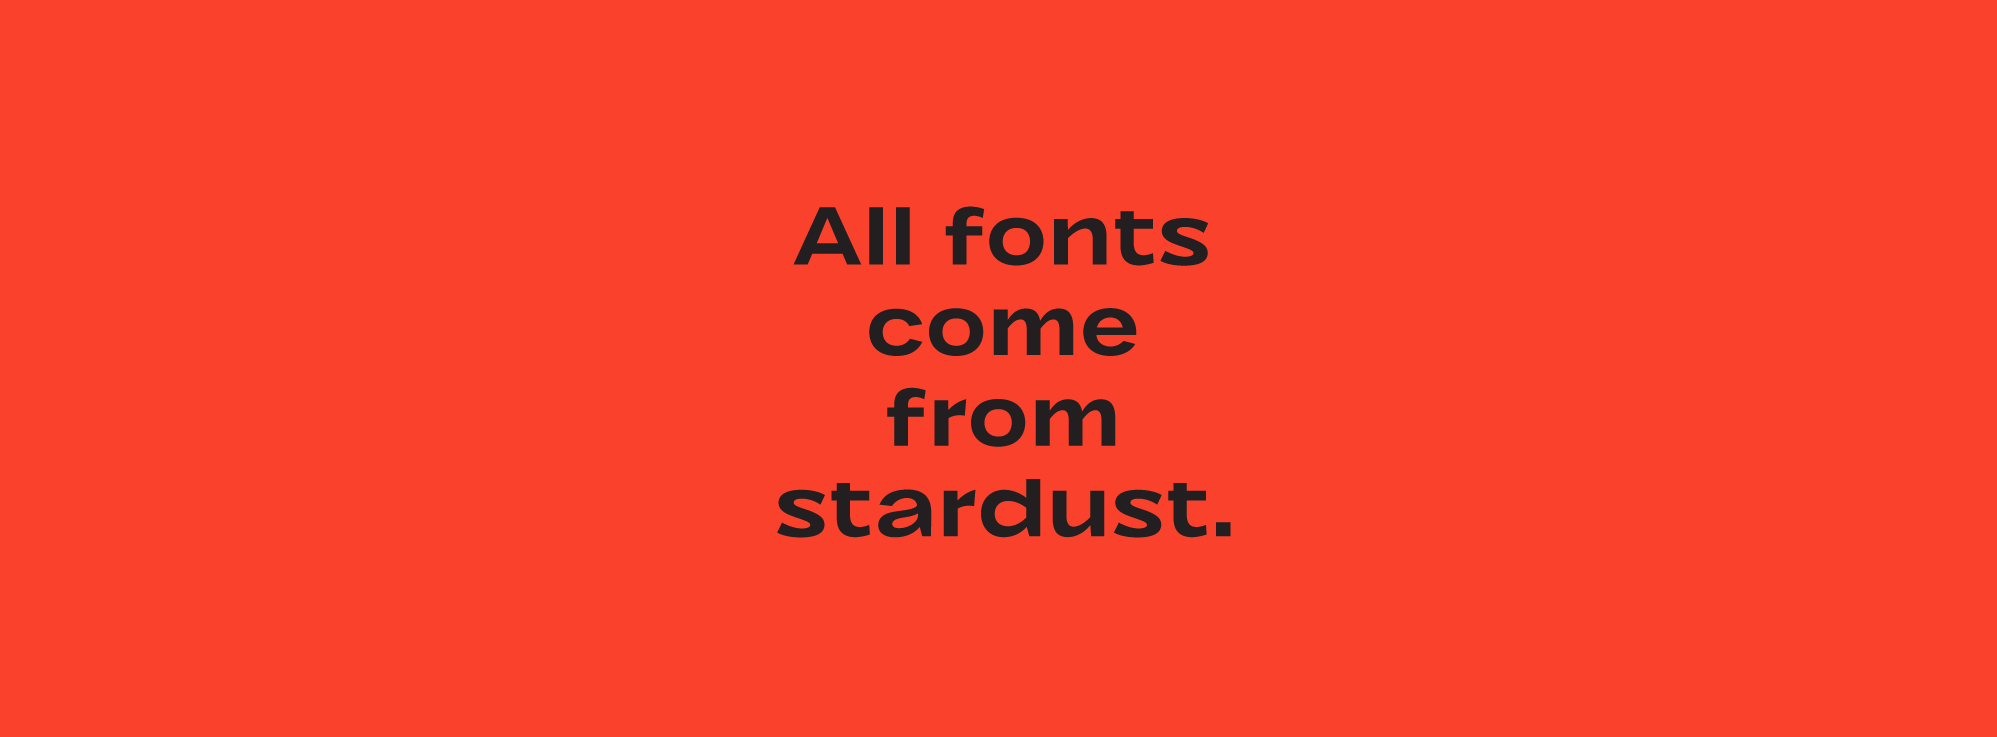 Naoko Font | A sans-serif font family of 7 weights